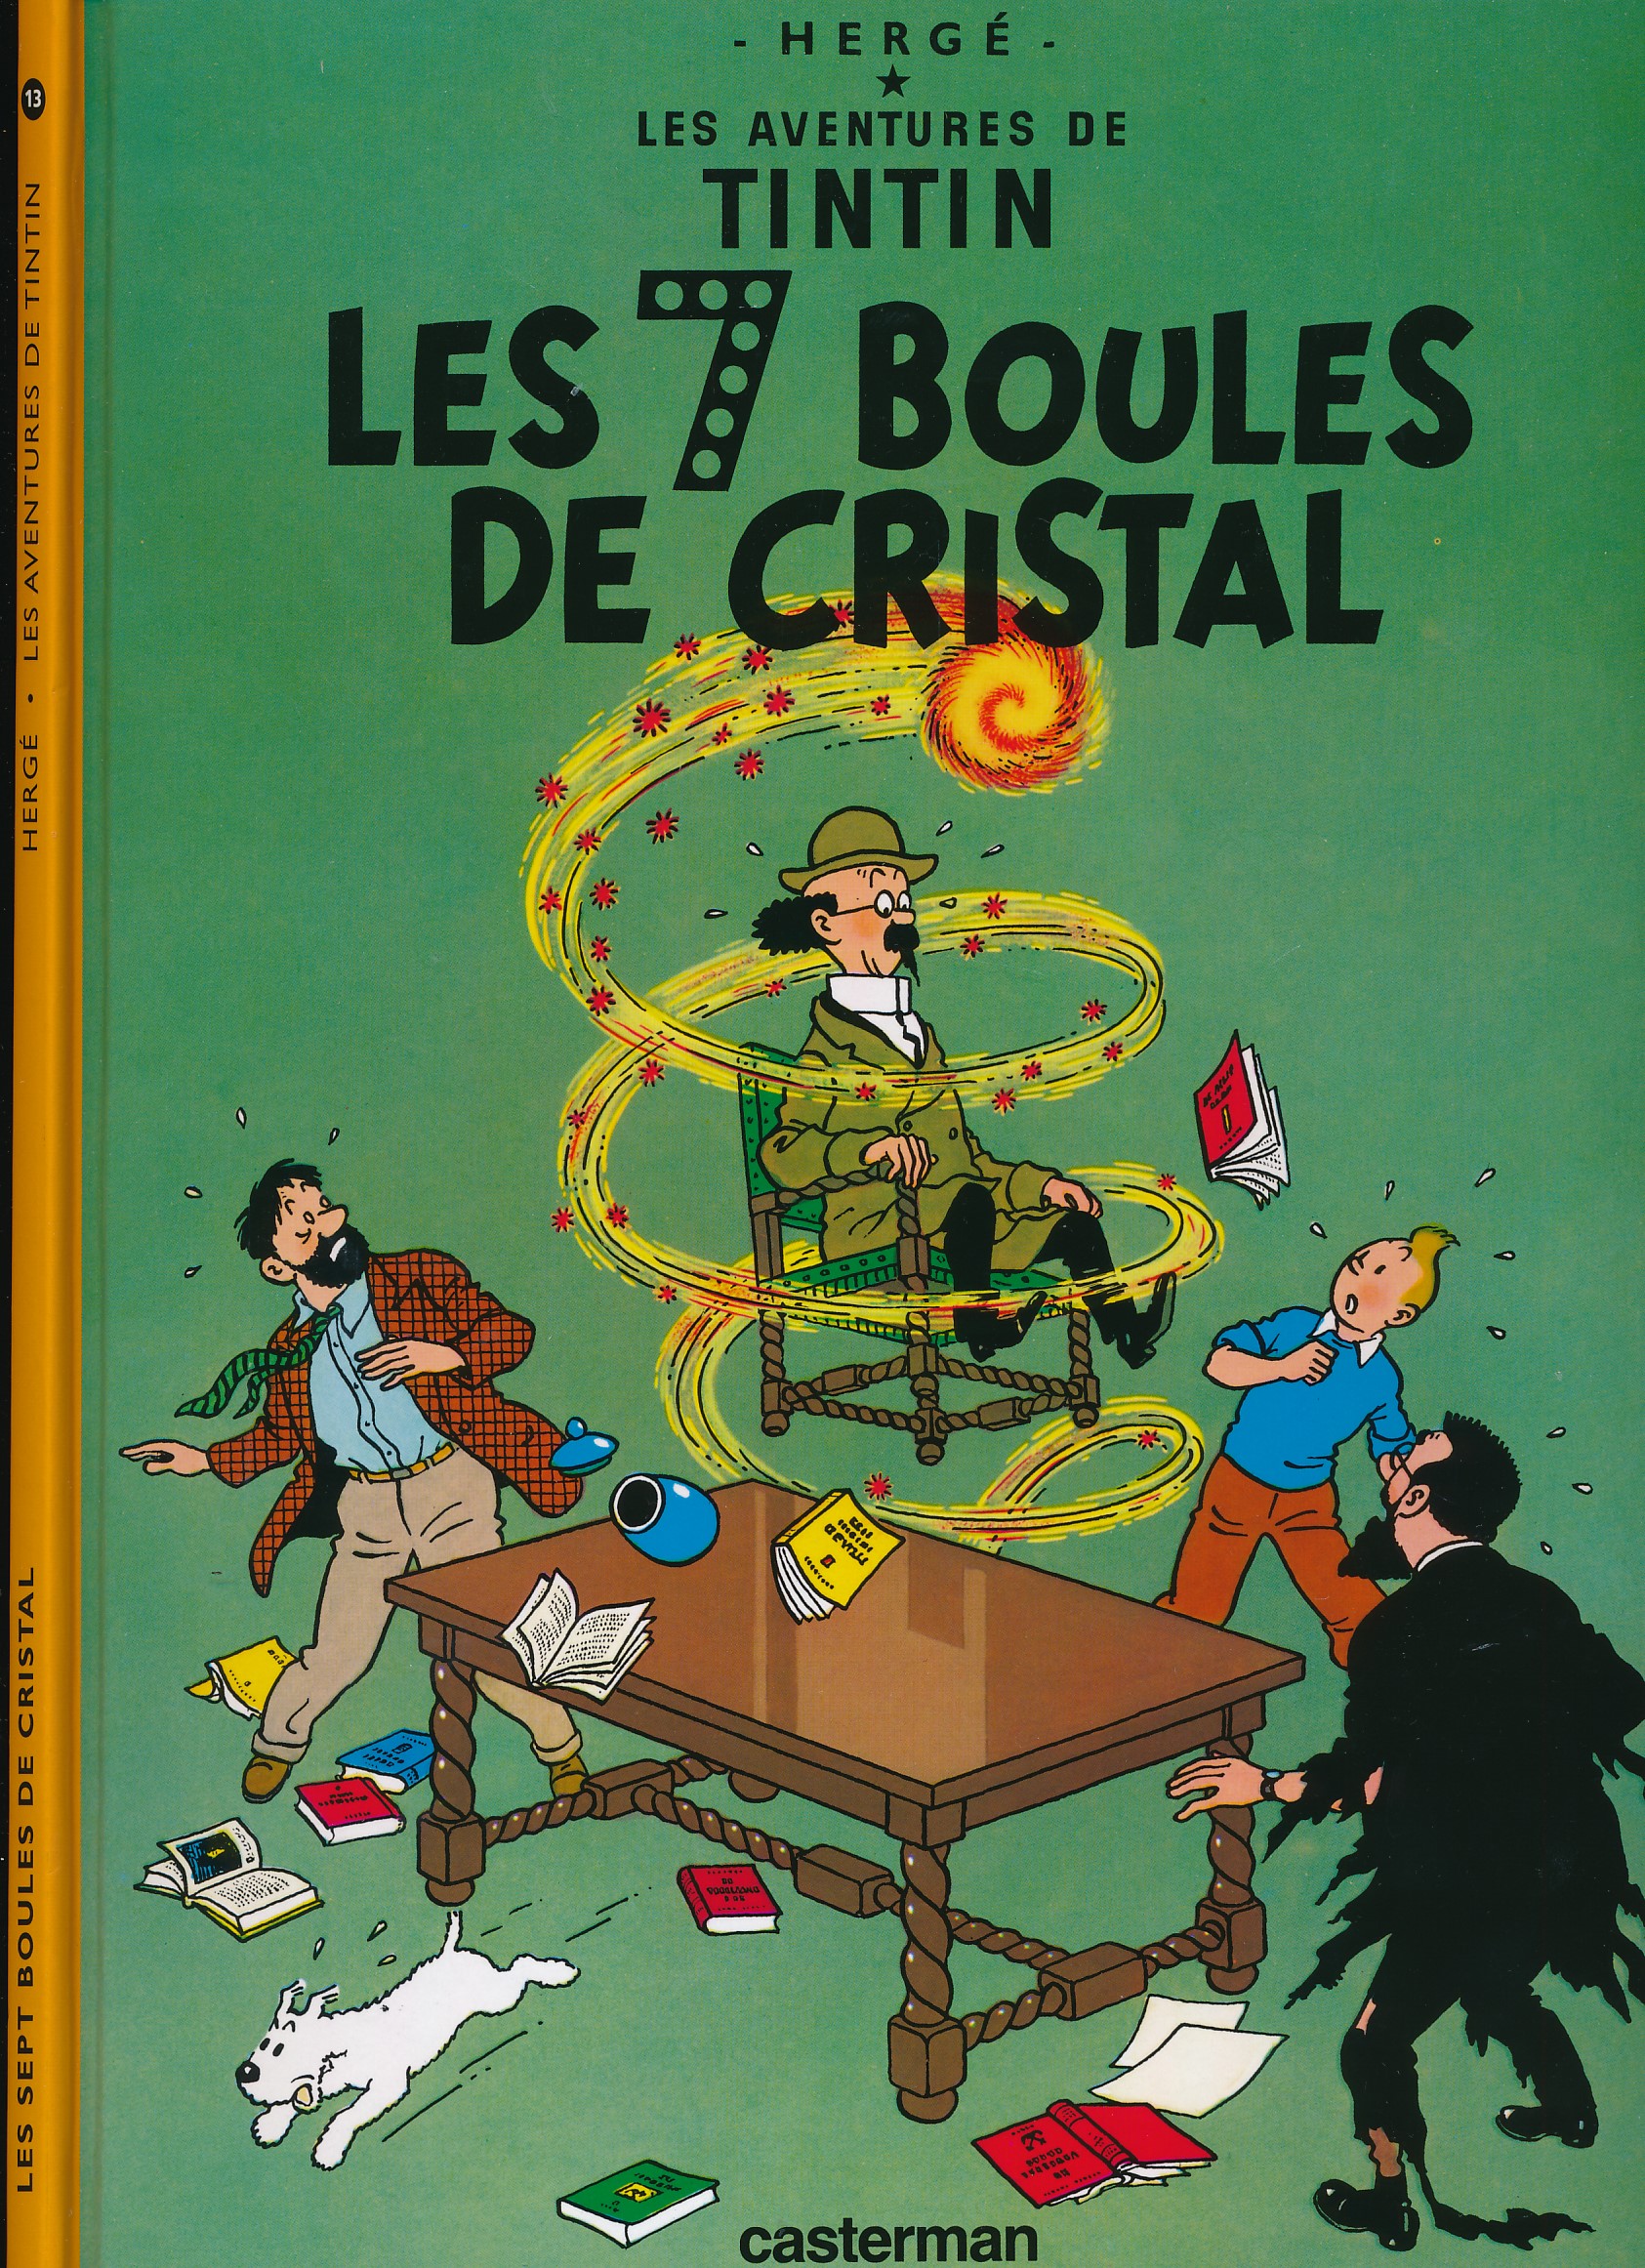 Les 7 Boules de Cristal [The Seven Crystal Balls]. The Adventures of Tintin.